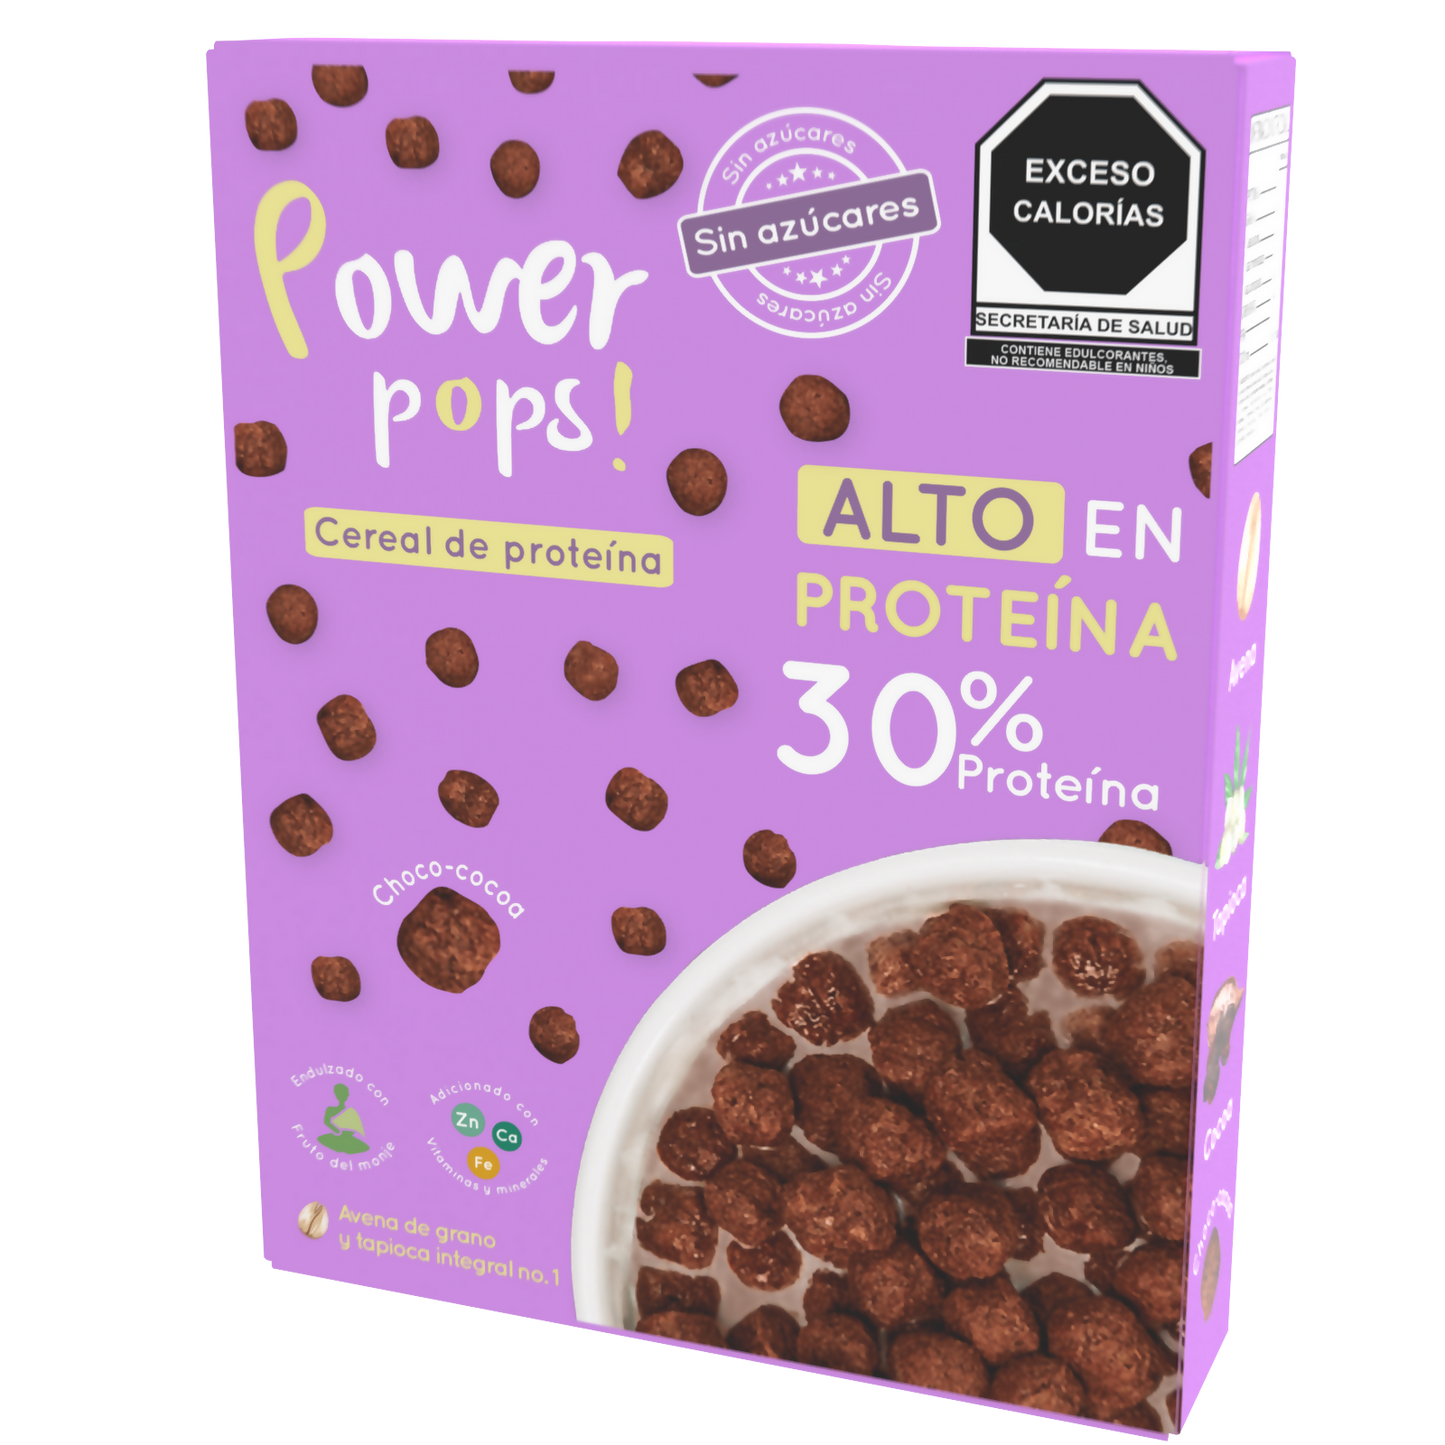 Power pops! Cereal de proteína Sabor chocolate